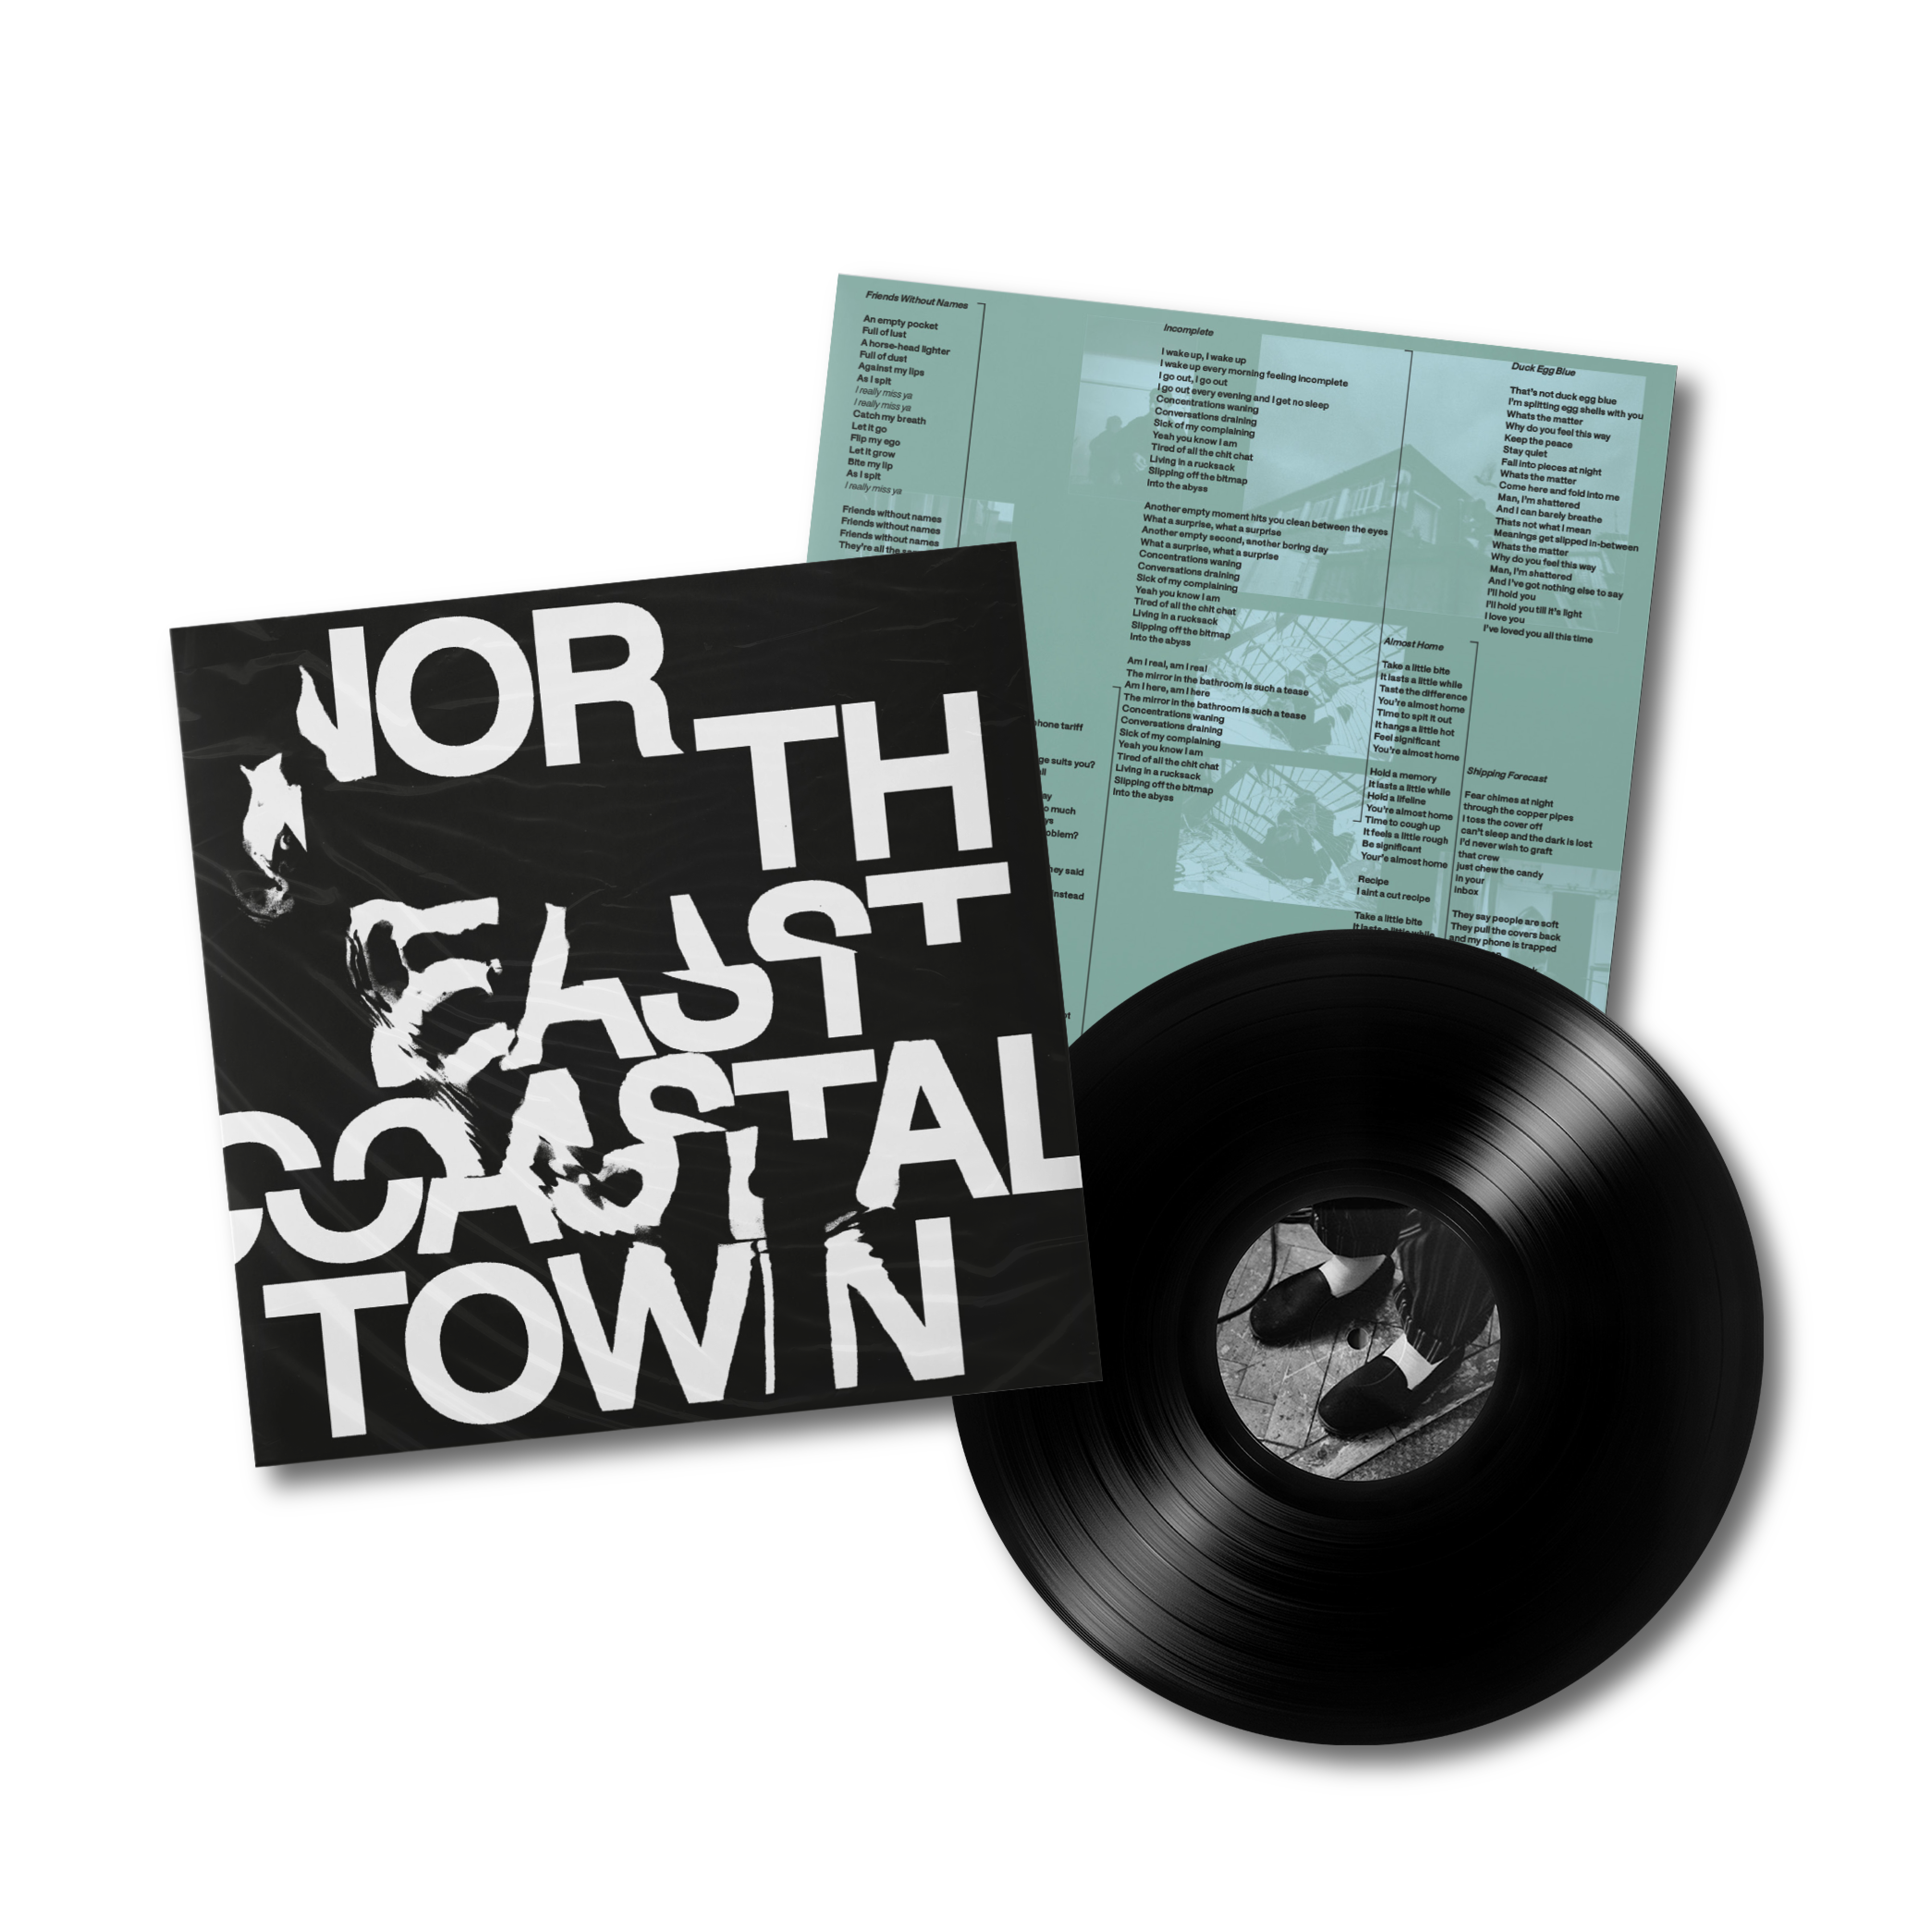 North East Coastal Town - Black LP - LIFE